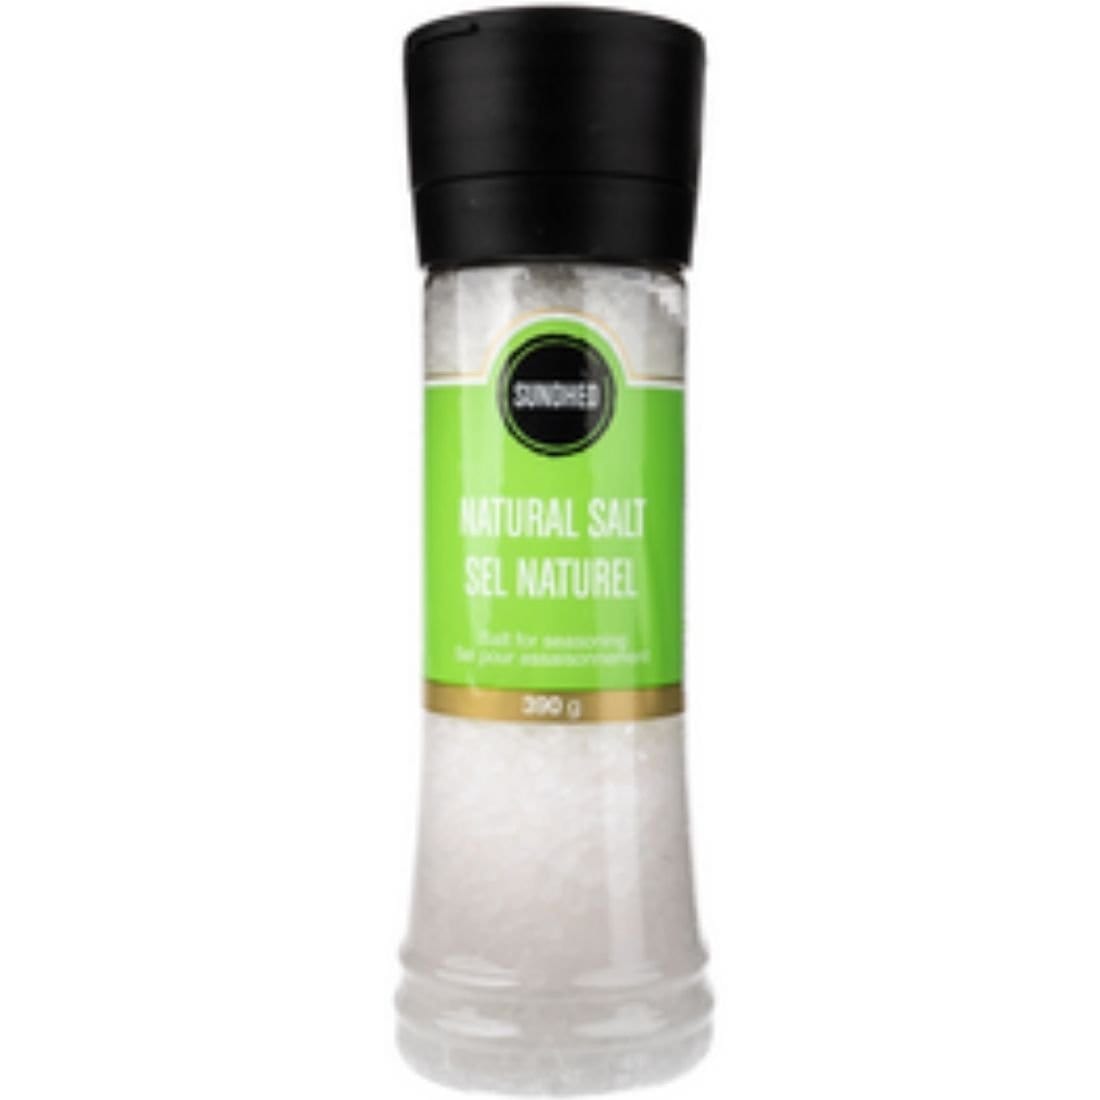 Sundhed Himalayan Salt Natural White Course Grinder, 390g, Clearance 40% Off, Final Sale